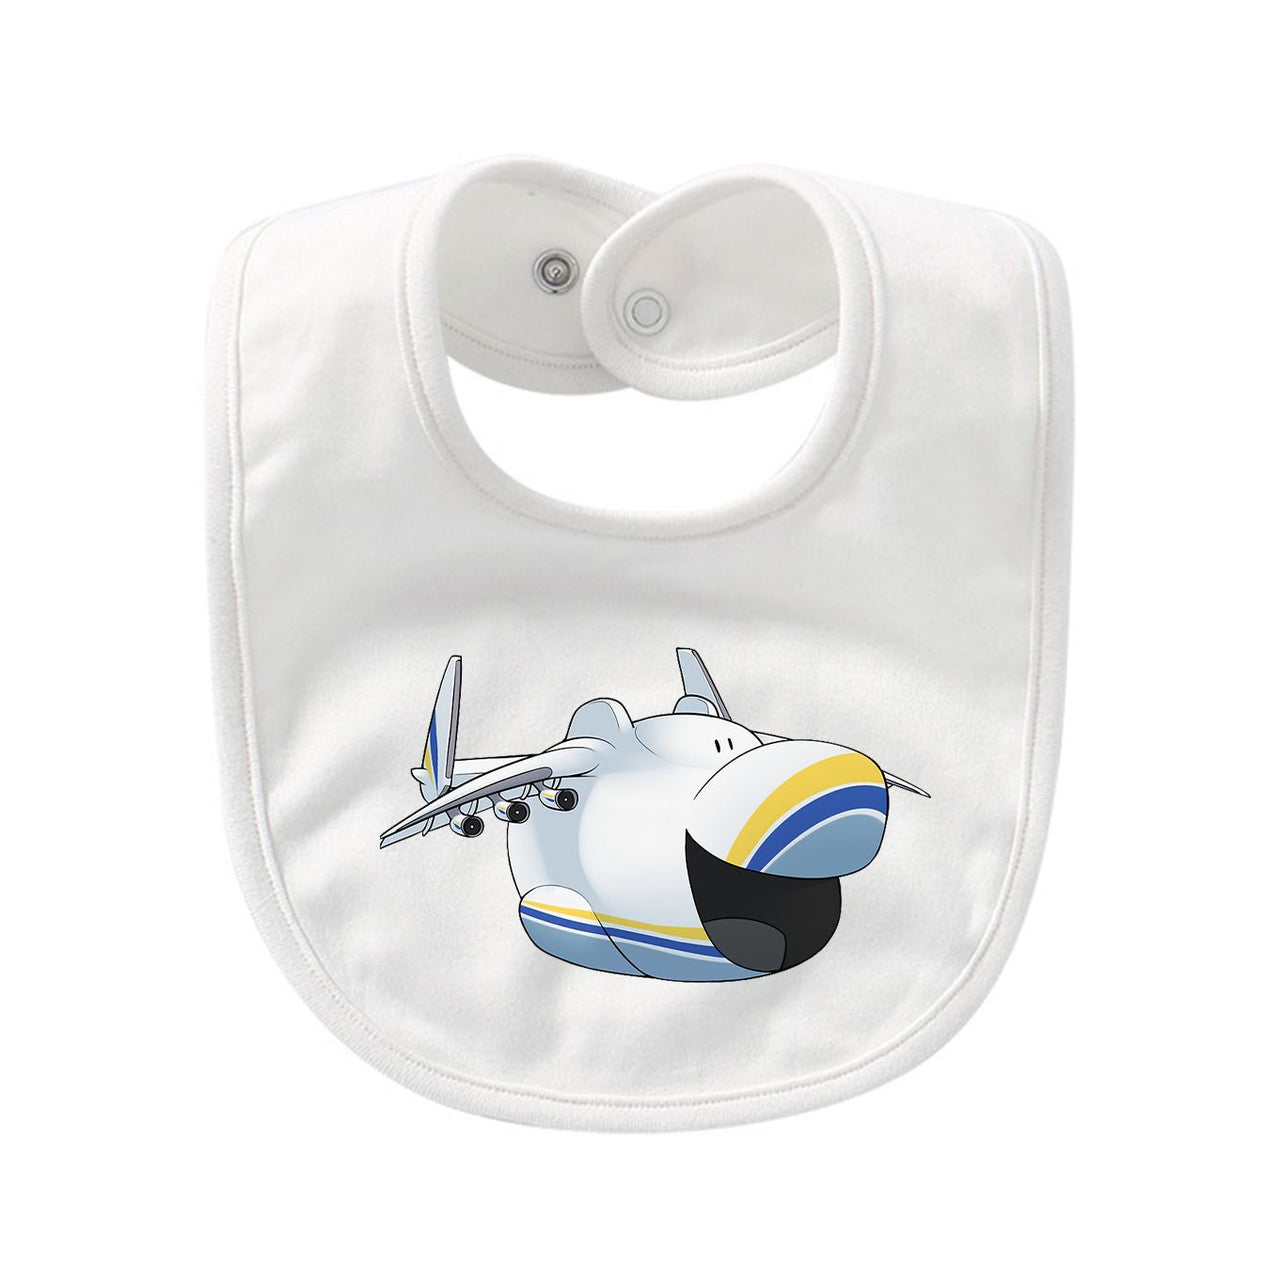 Antonov 225 Mouth Designed Baby Saliva & Feeding Towels